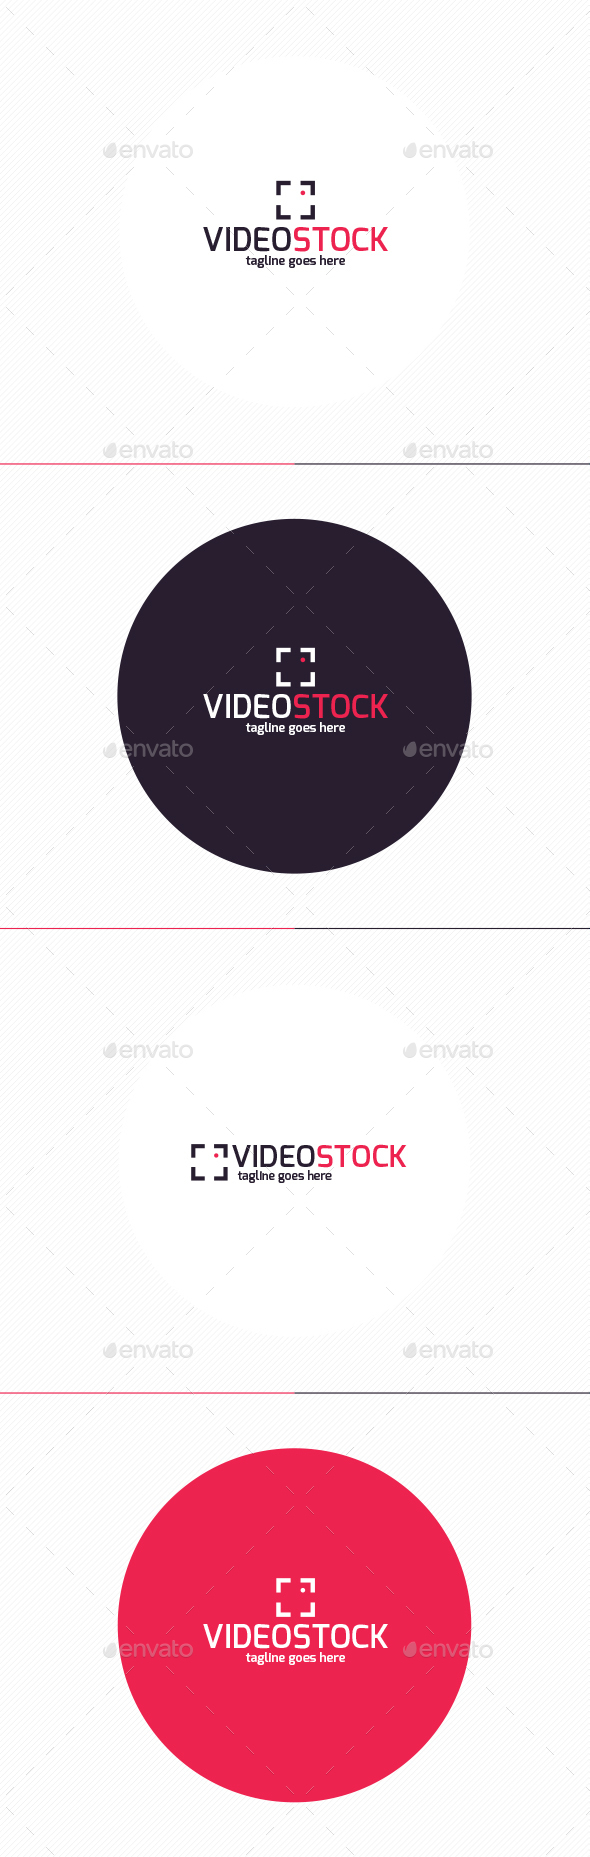 Video Stock Logo